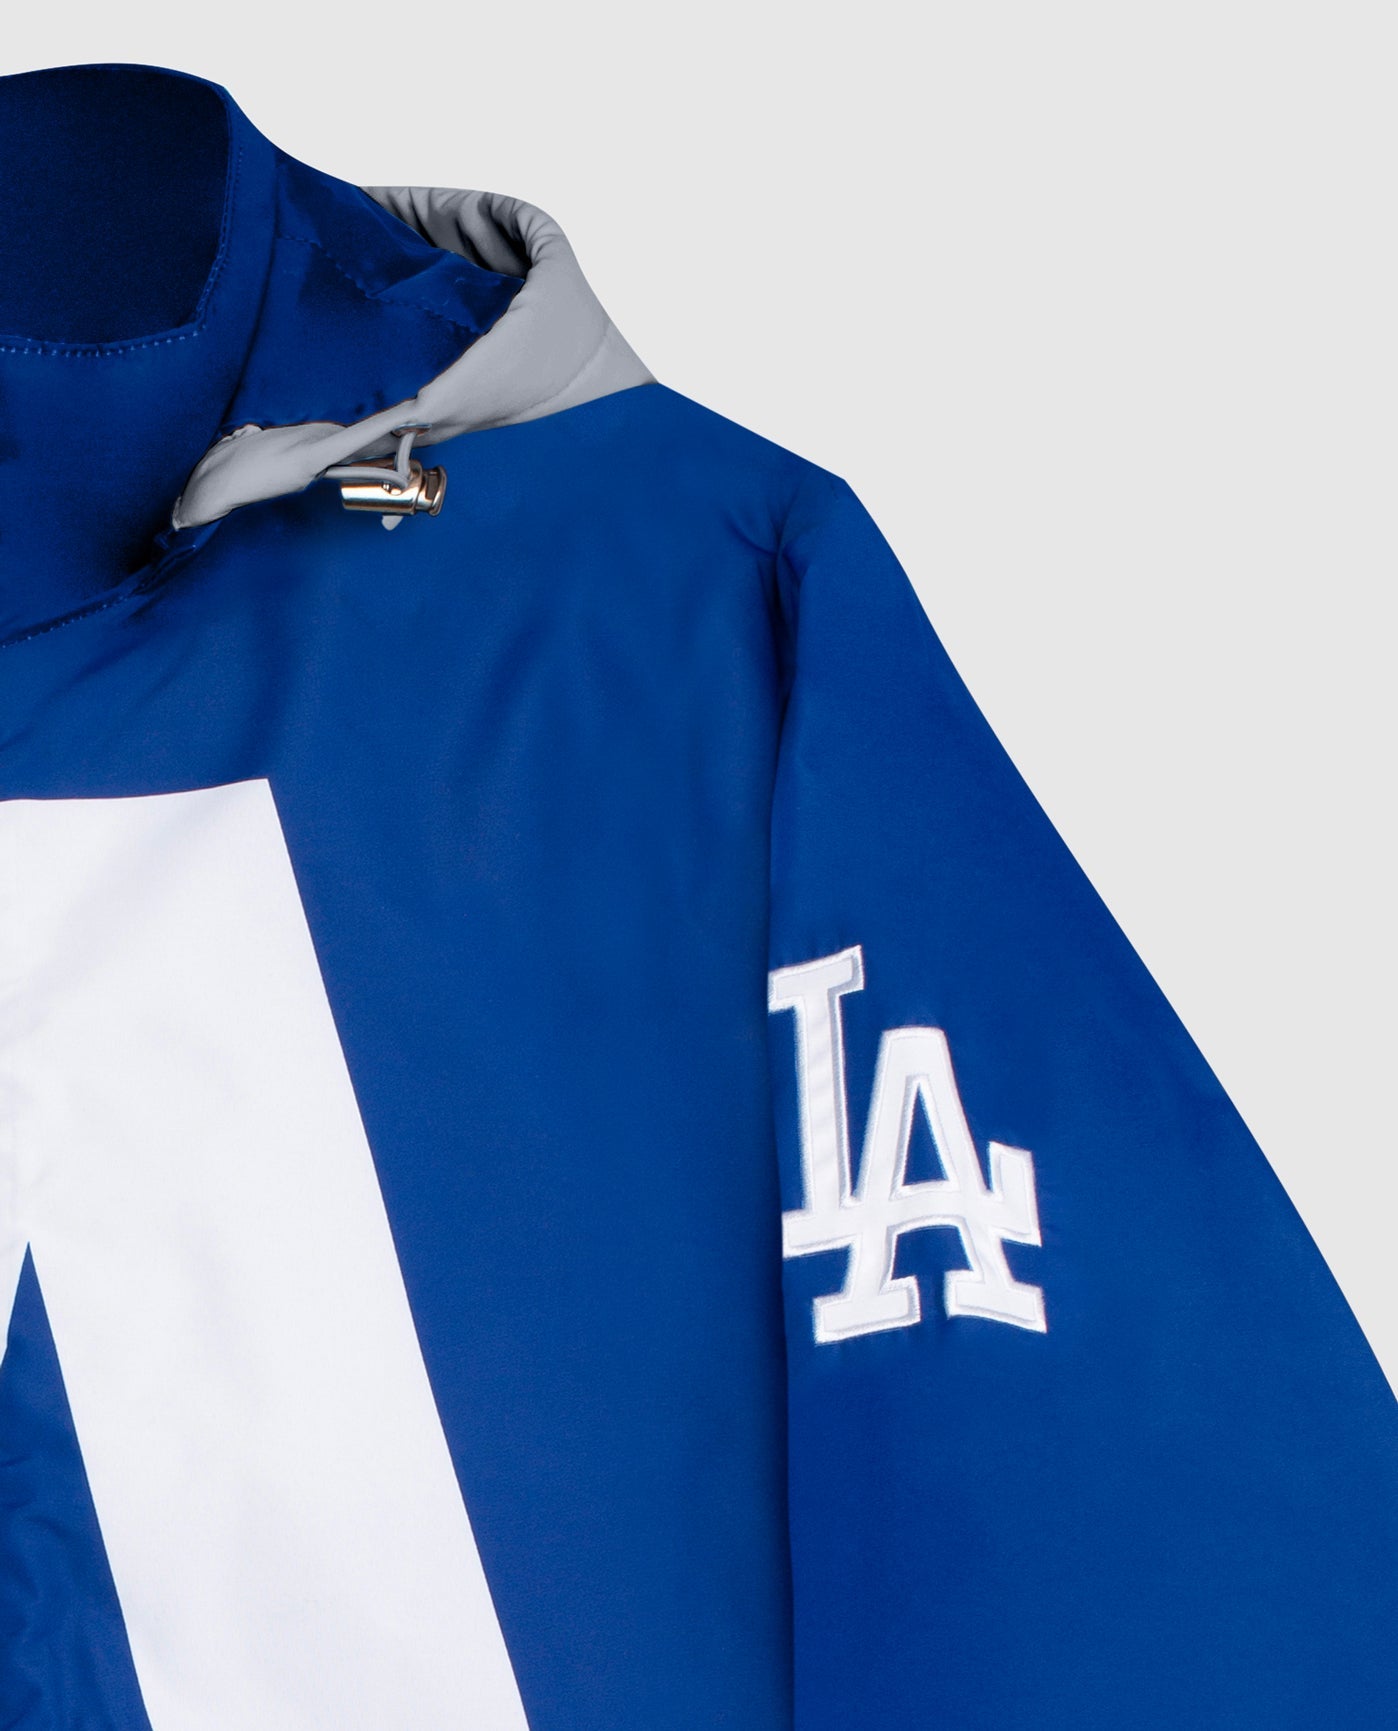 Los Angeles Dodgers Blue Jacket